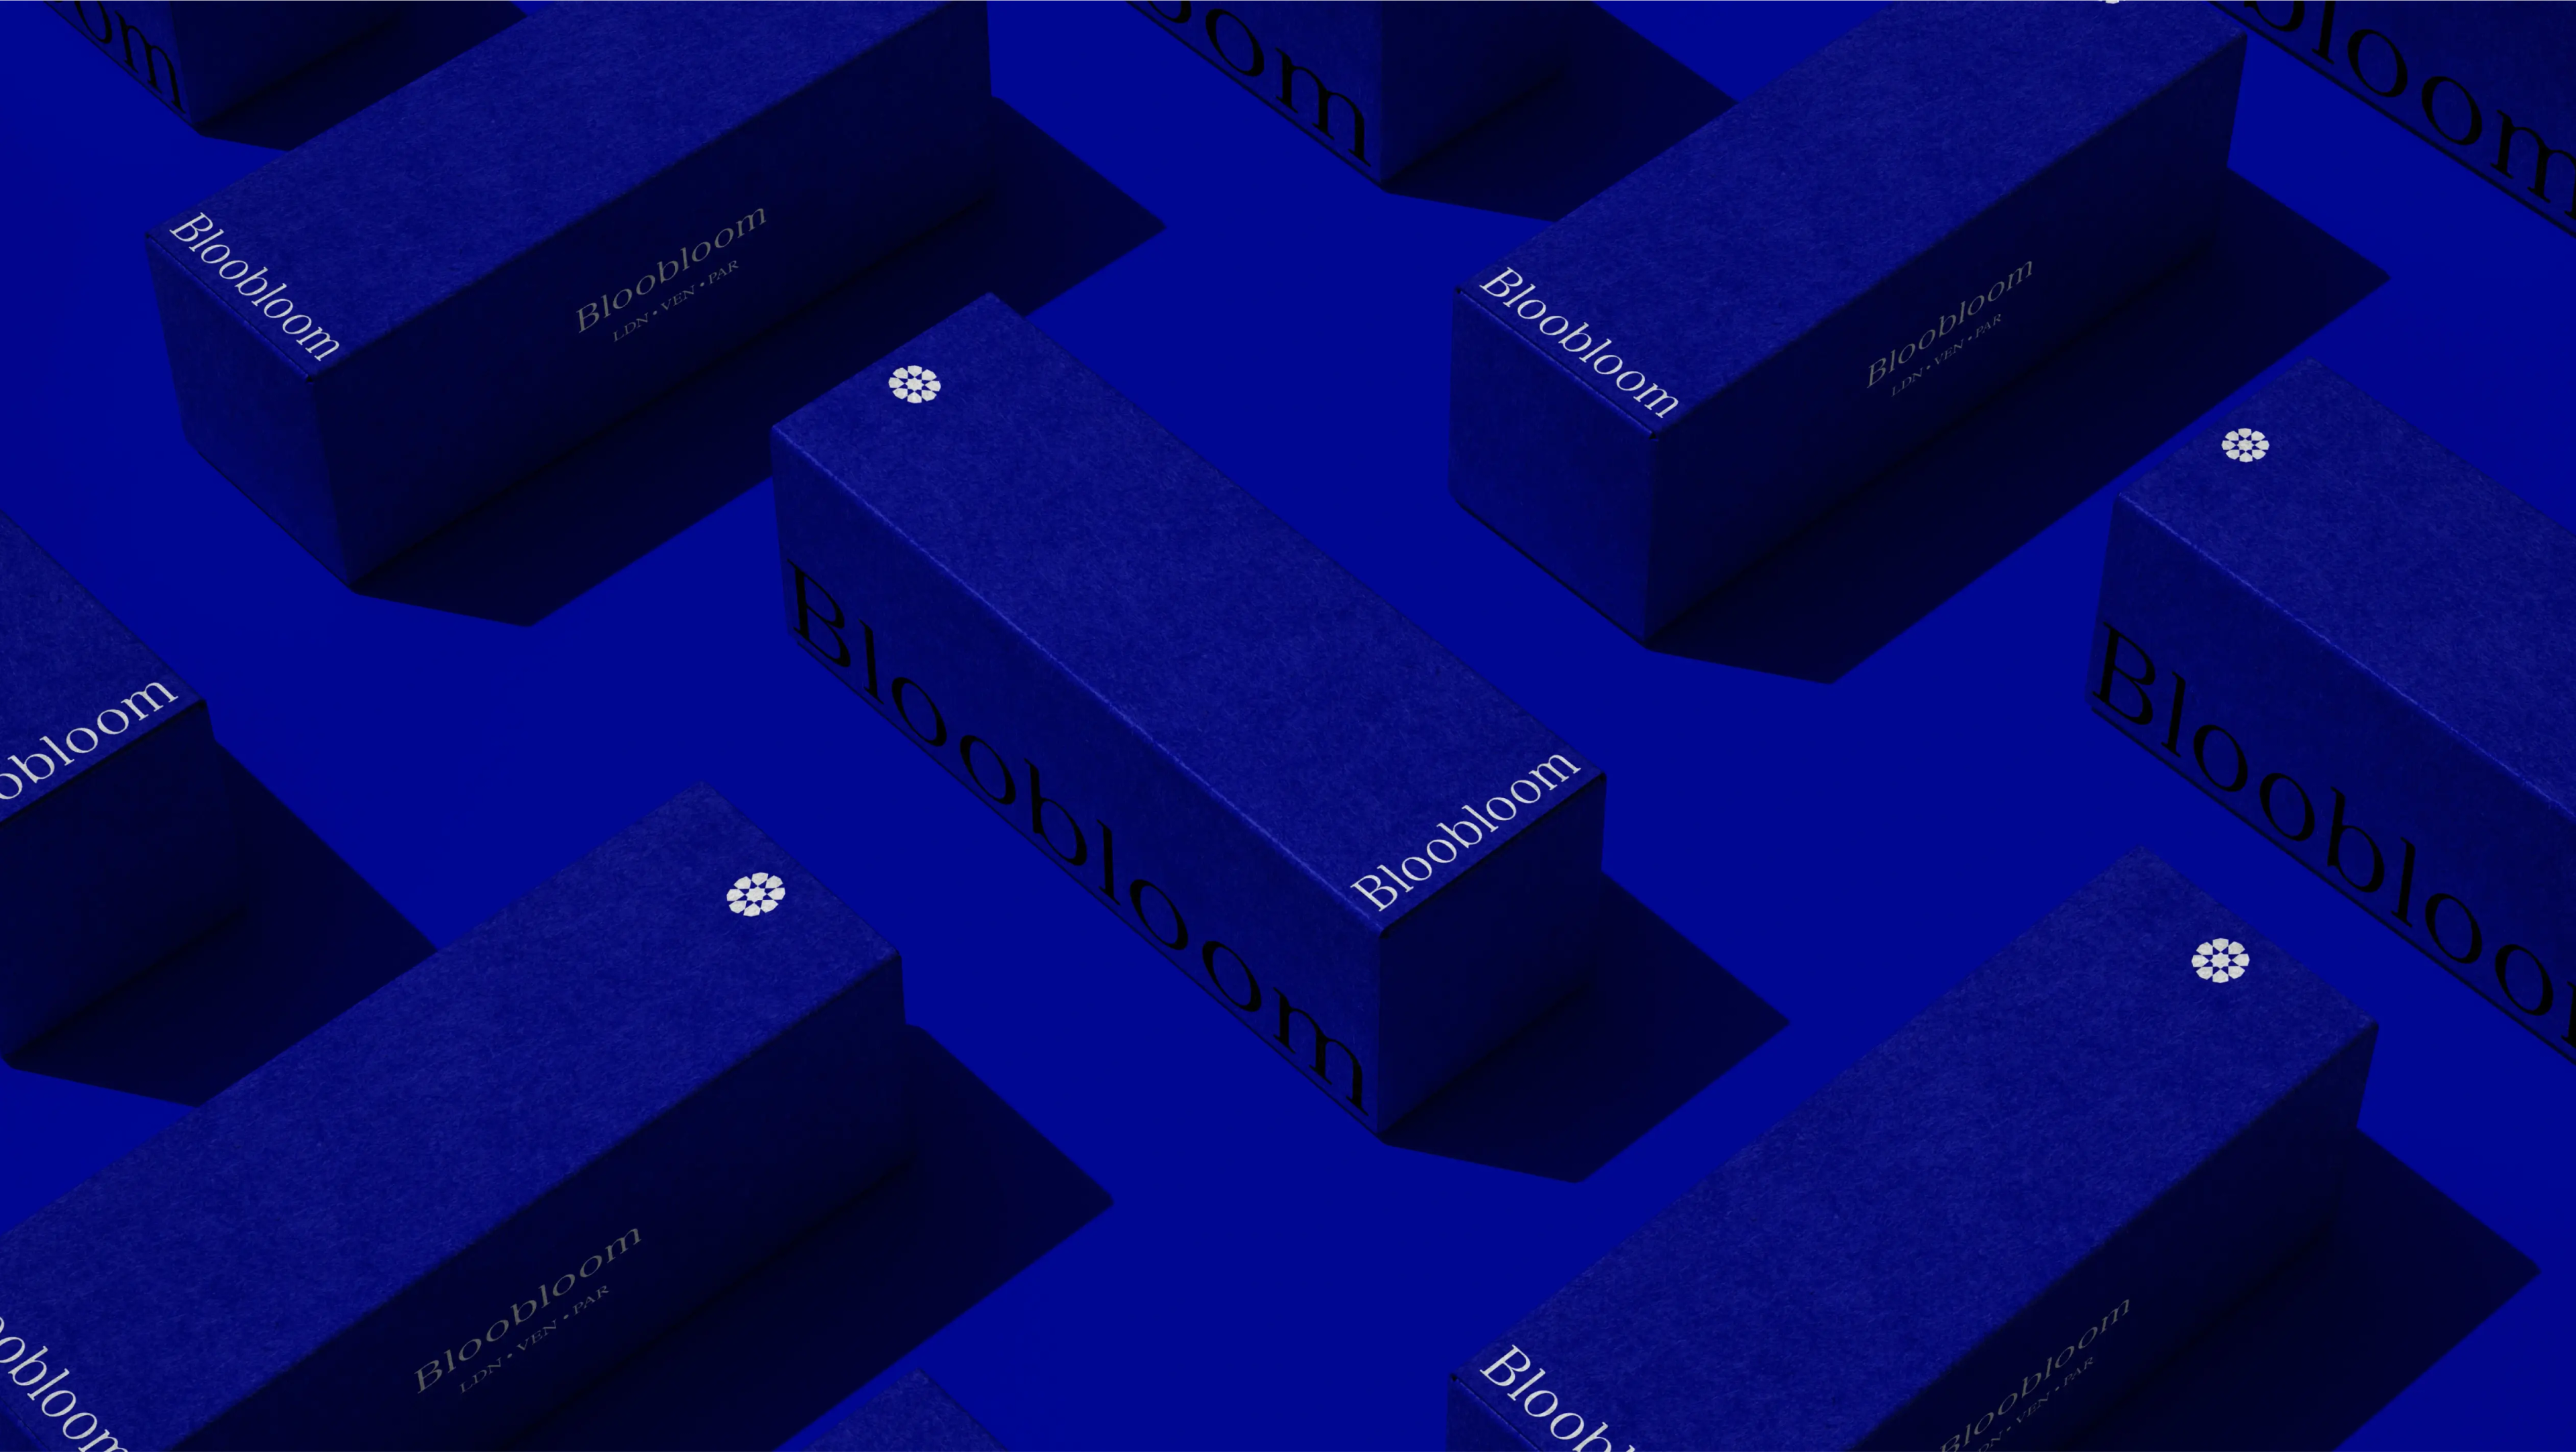 Bloobloom glasses blue packaging design by Bodkin Studio